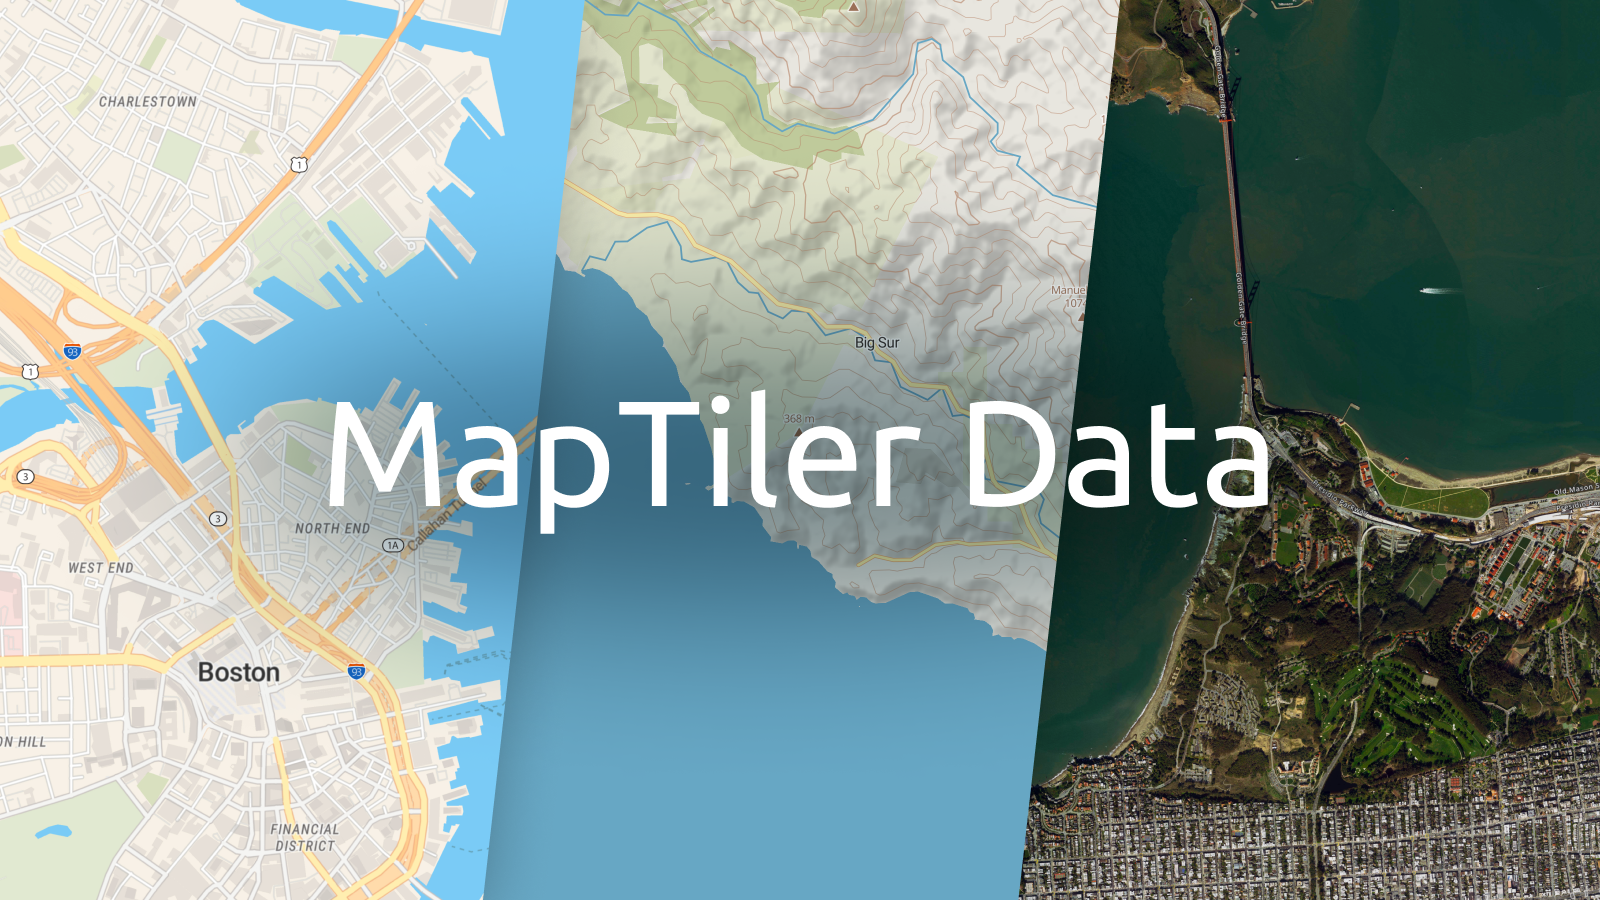 Launching MapTiler Data for self-hosting image